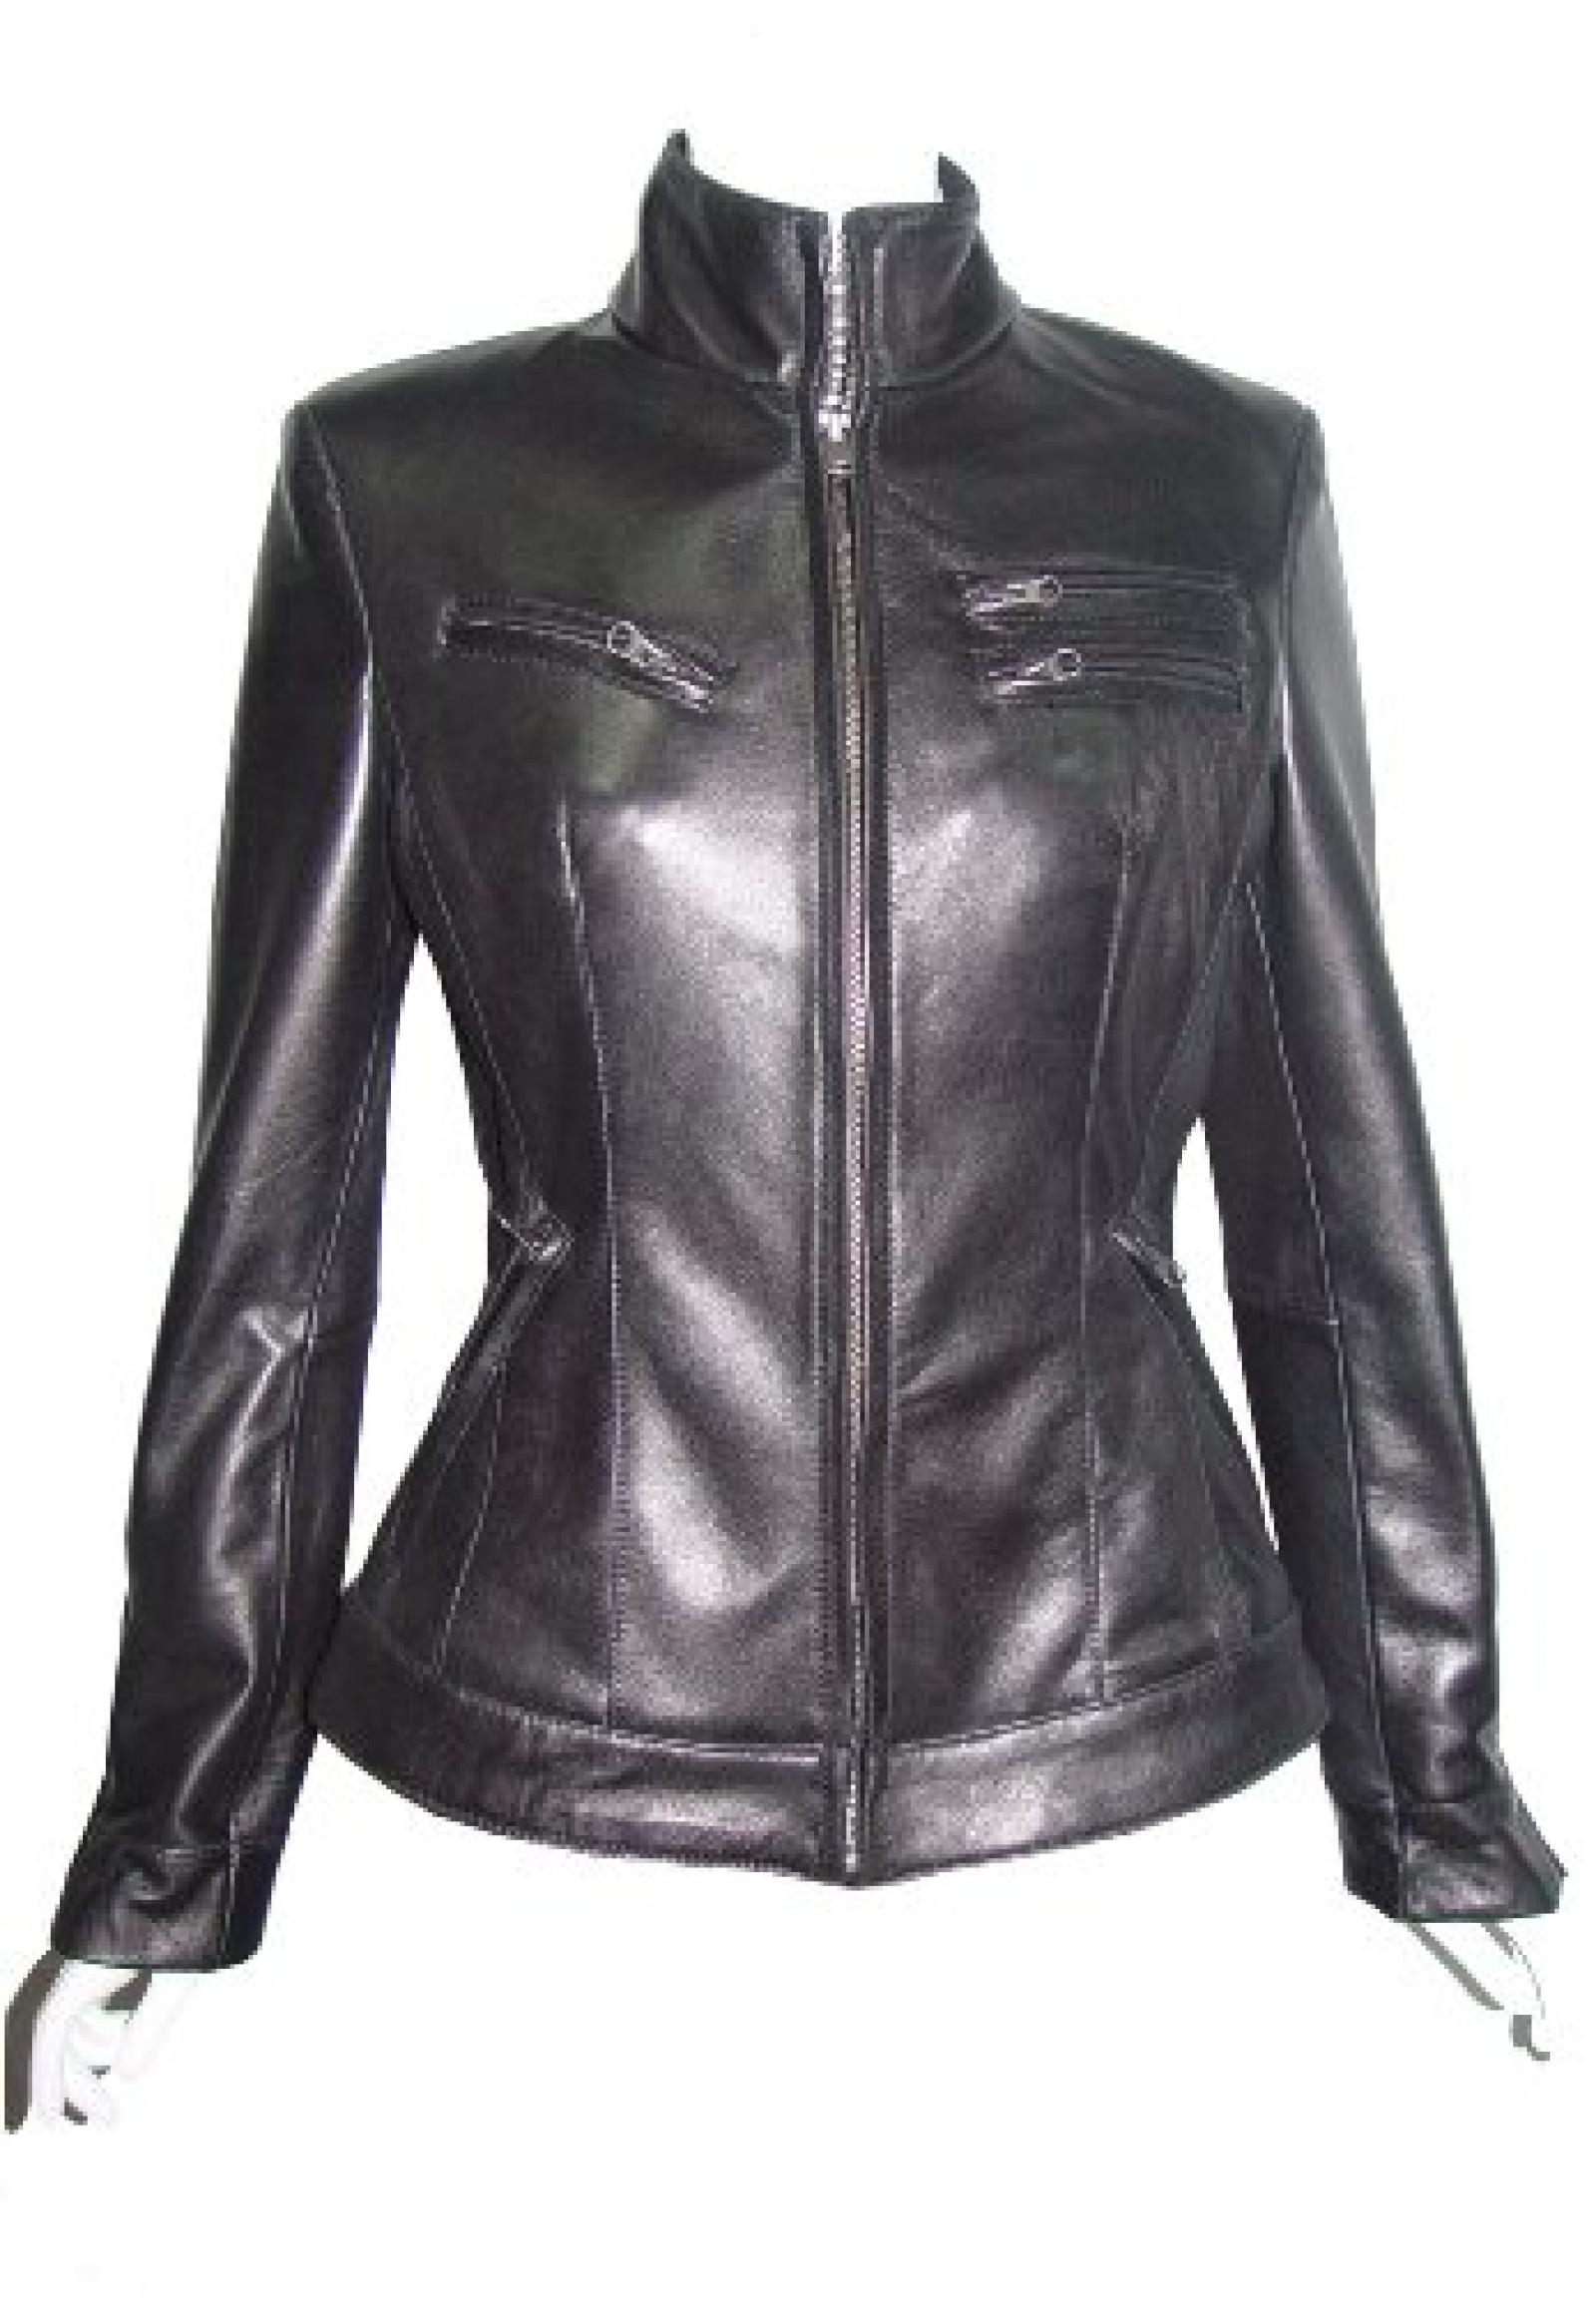 Nettailor Women PETITE SZ 4199 Soft Leather New Casual Biker Jacket 